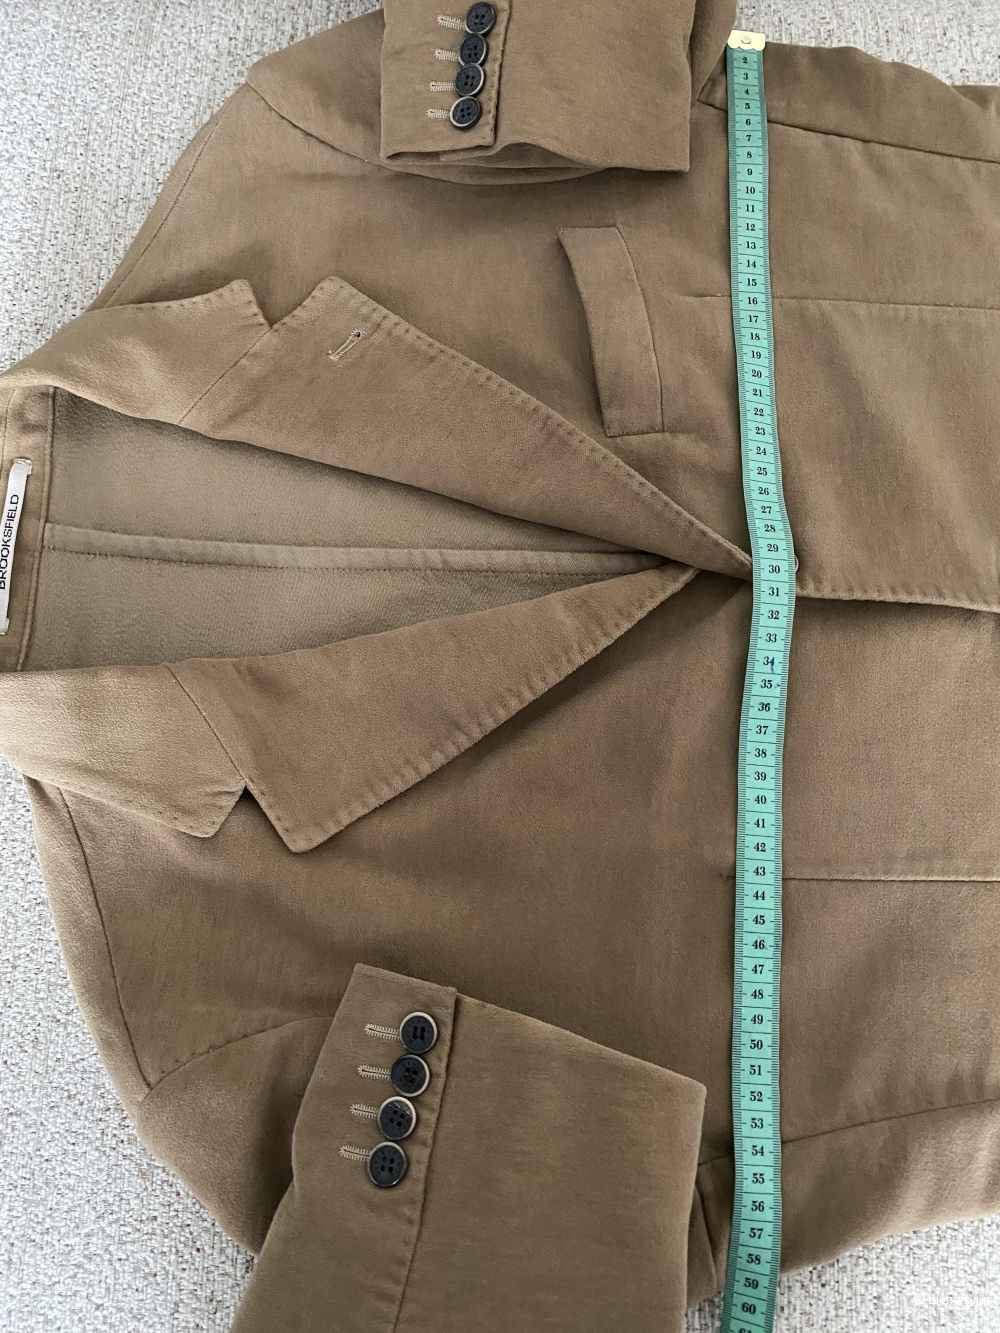 Мужской пиджак Brooksfield размер 52,сумка Roncato